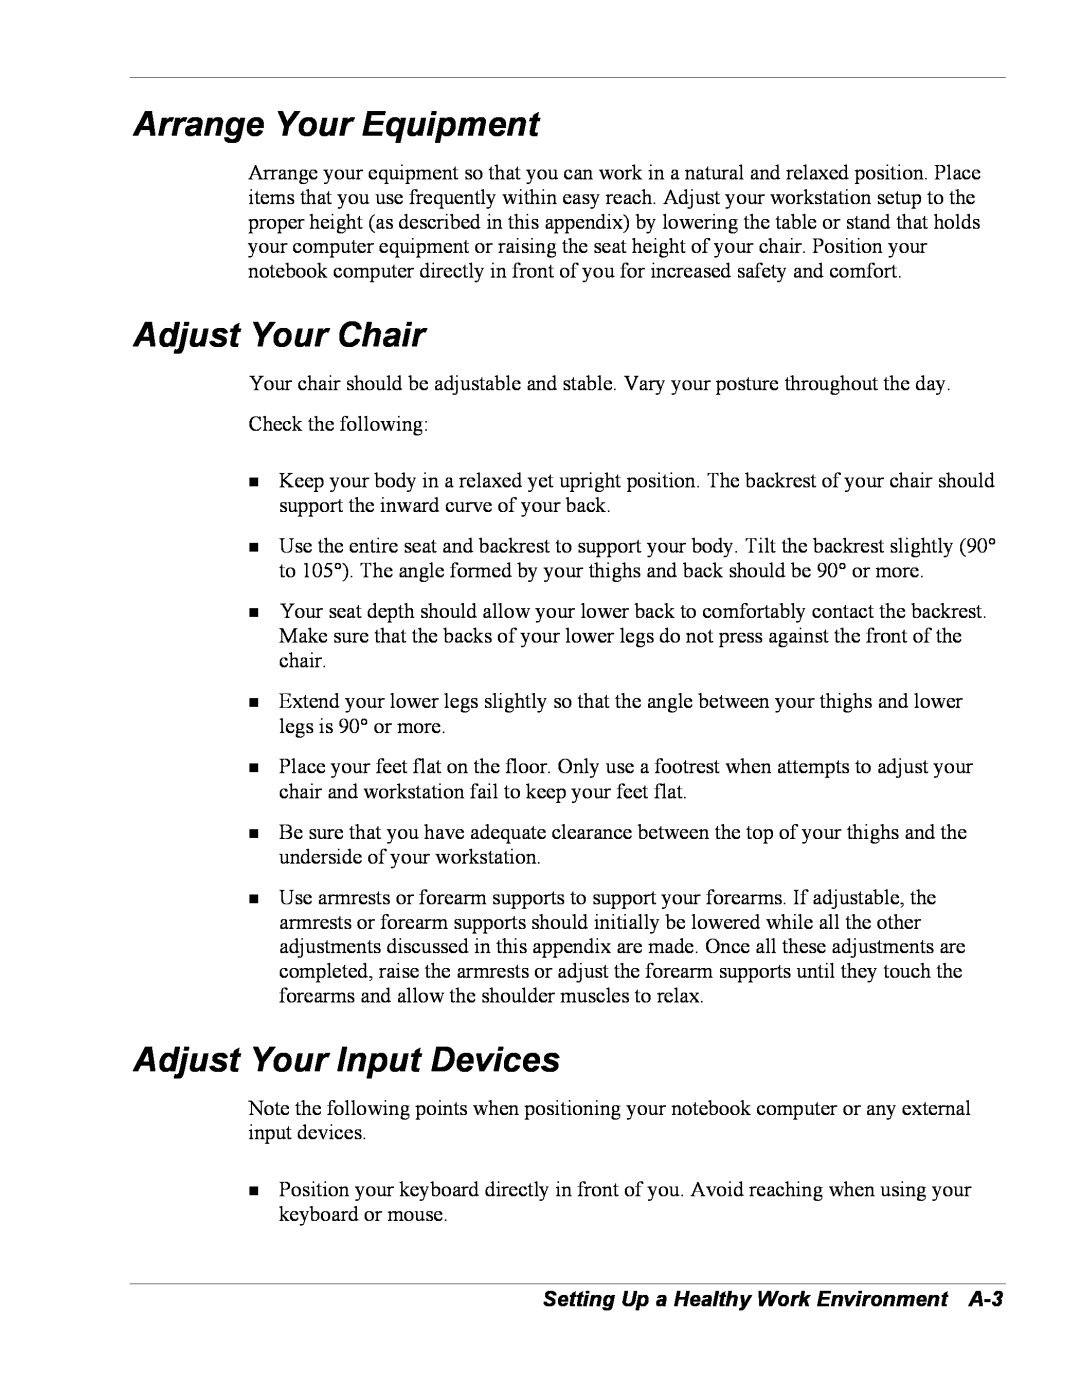 NEC Versa Series manual Arrange Your Equipment, Adjust Your Chair, Adjust Your Input Devices 